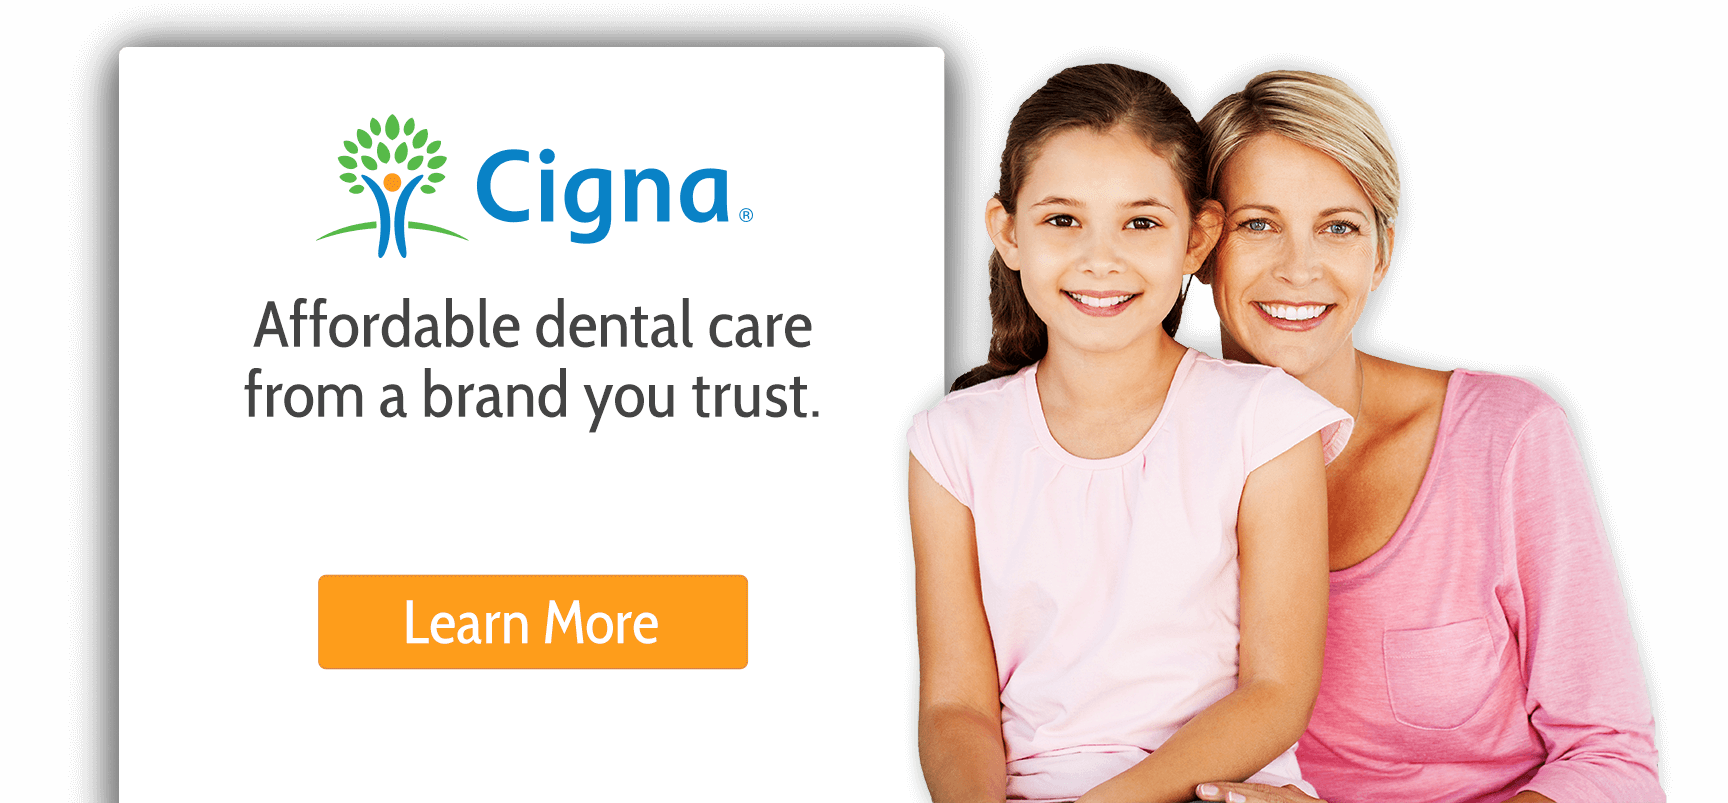 Cigna Dental Plans, a Dental Insurance Alternative Join. Save. Smile